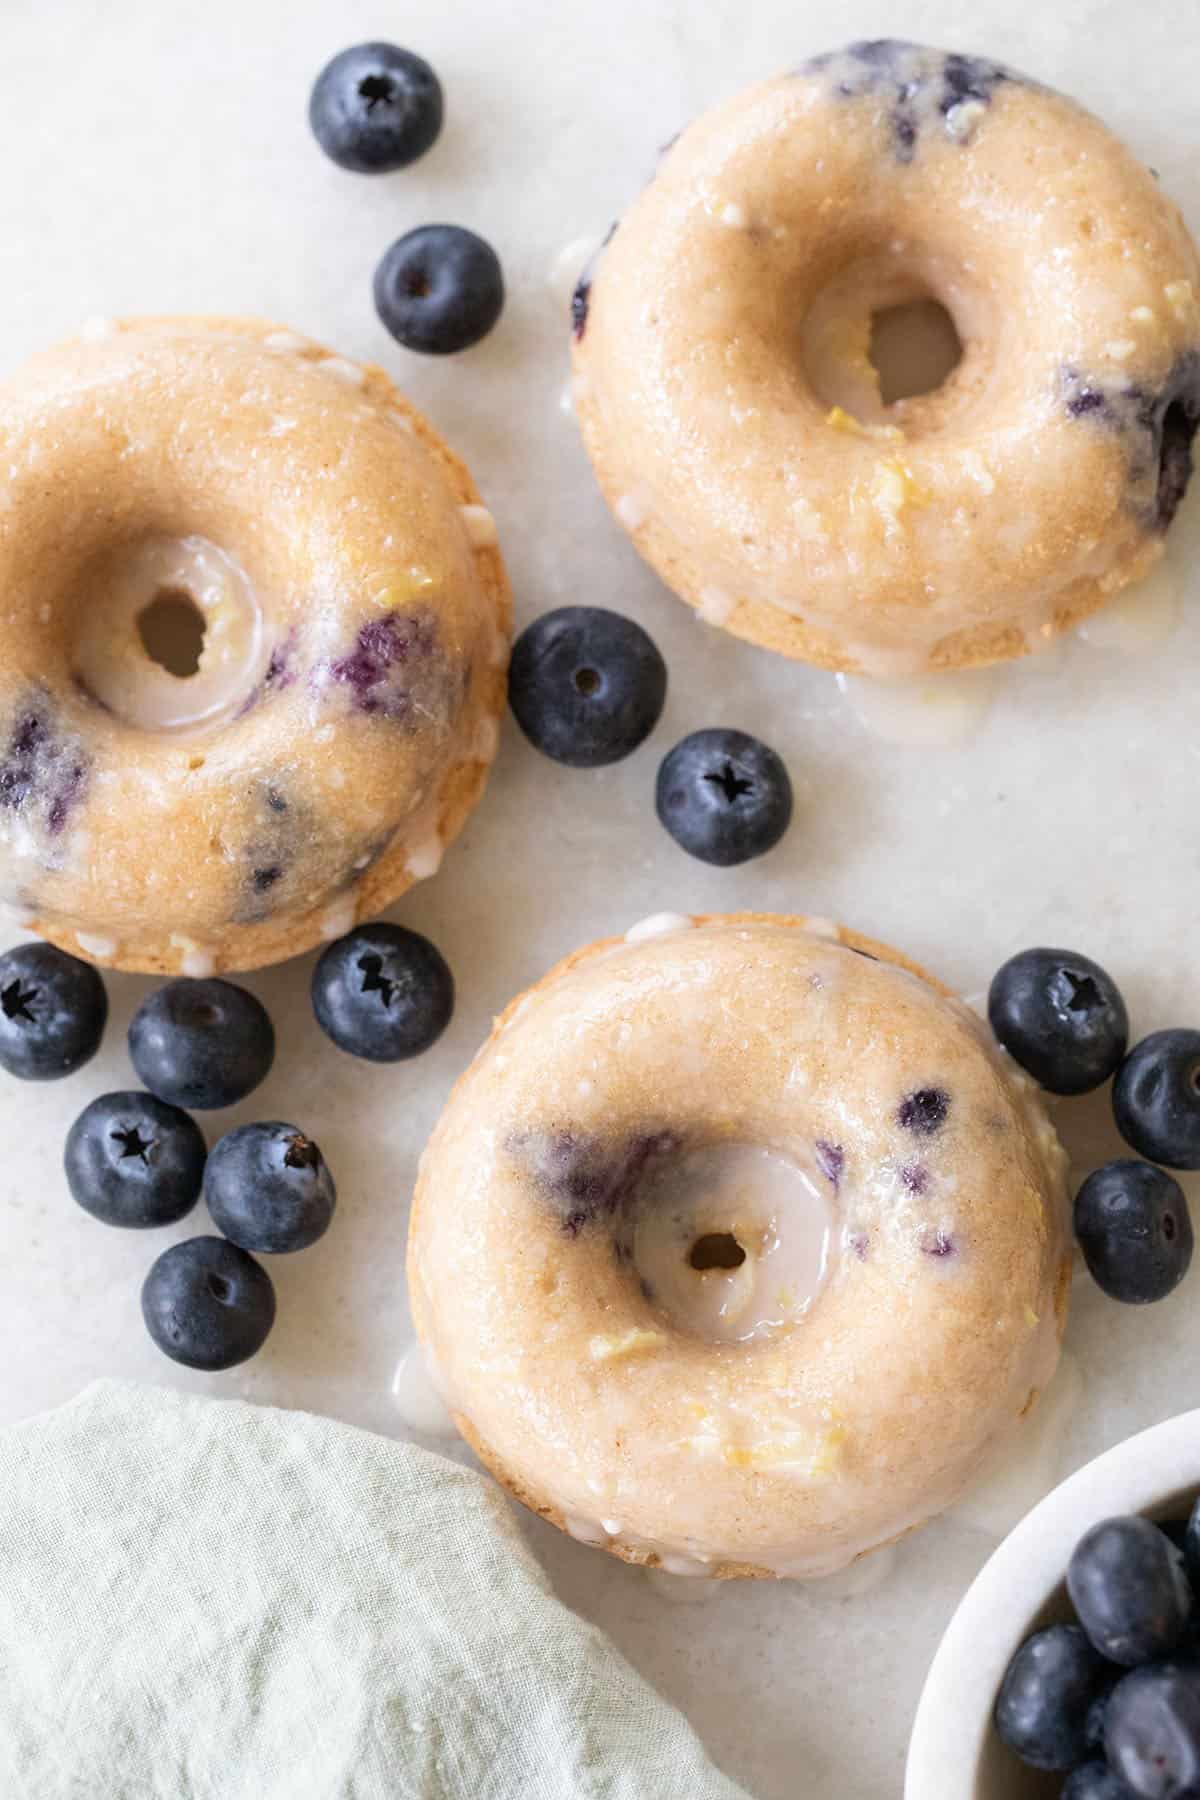 Baked blueberry donuts with glaze and lemon zest.